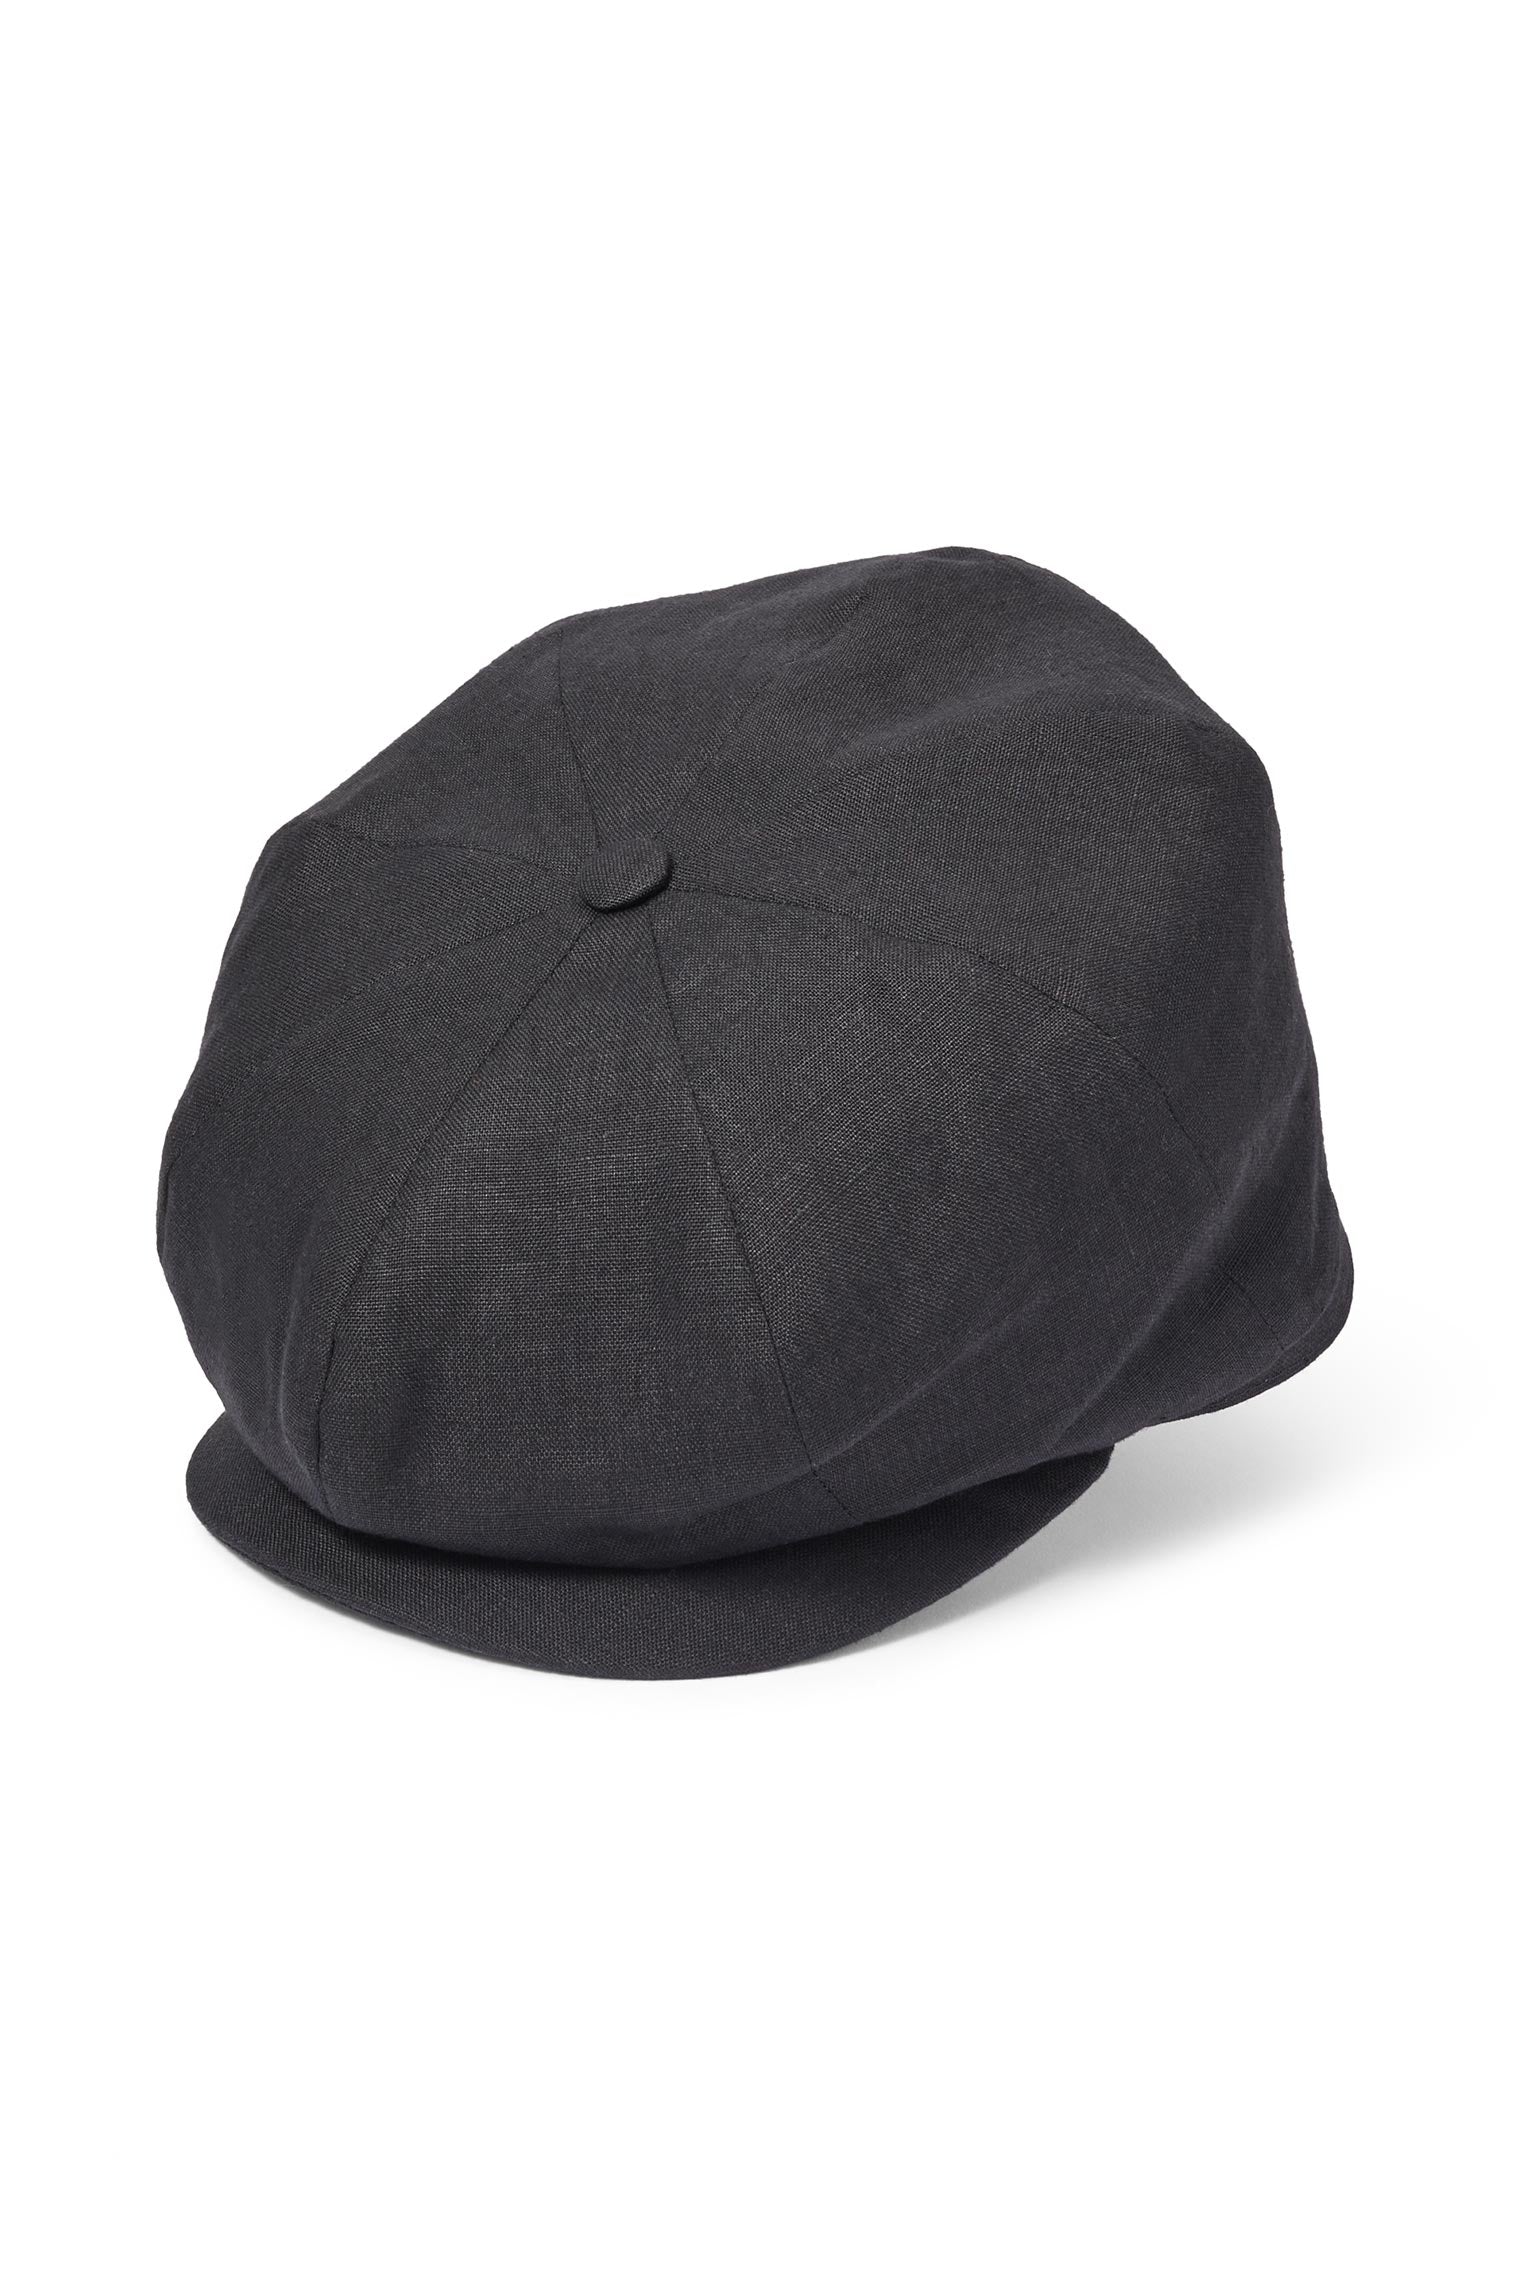 Tremelo Black Linen Bakerboy Cap - Hats for Tall People - Lock & Co. Hatters London UK